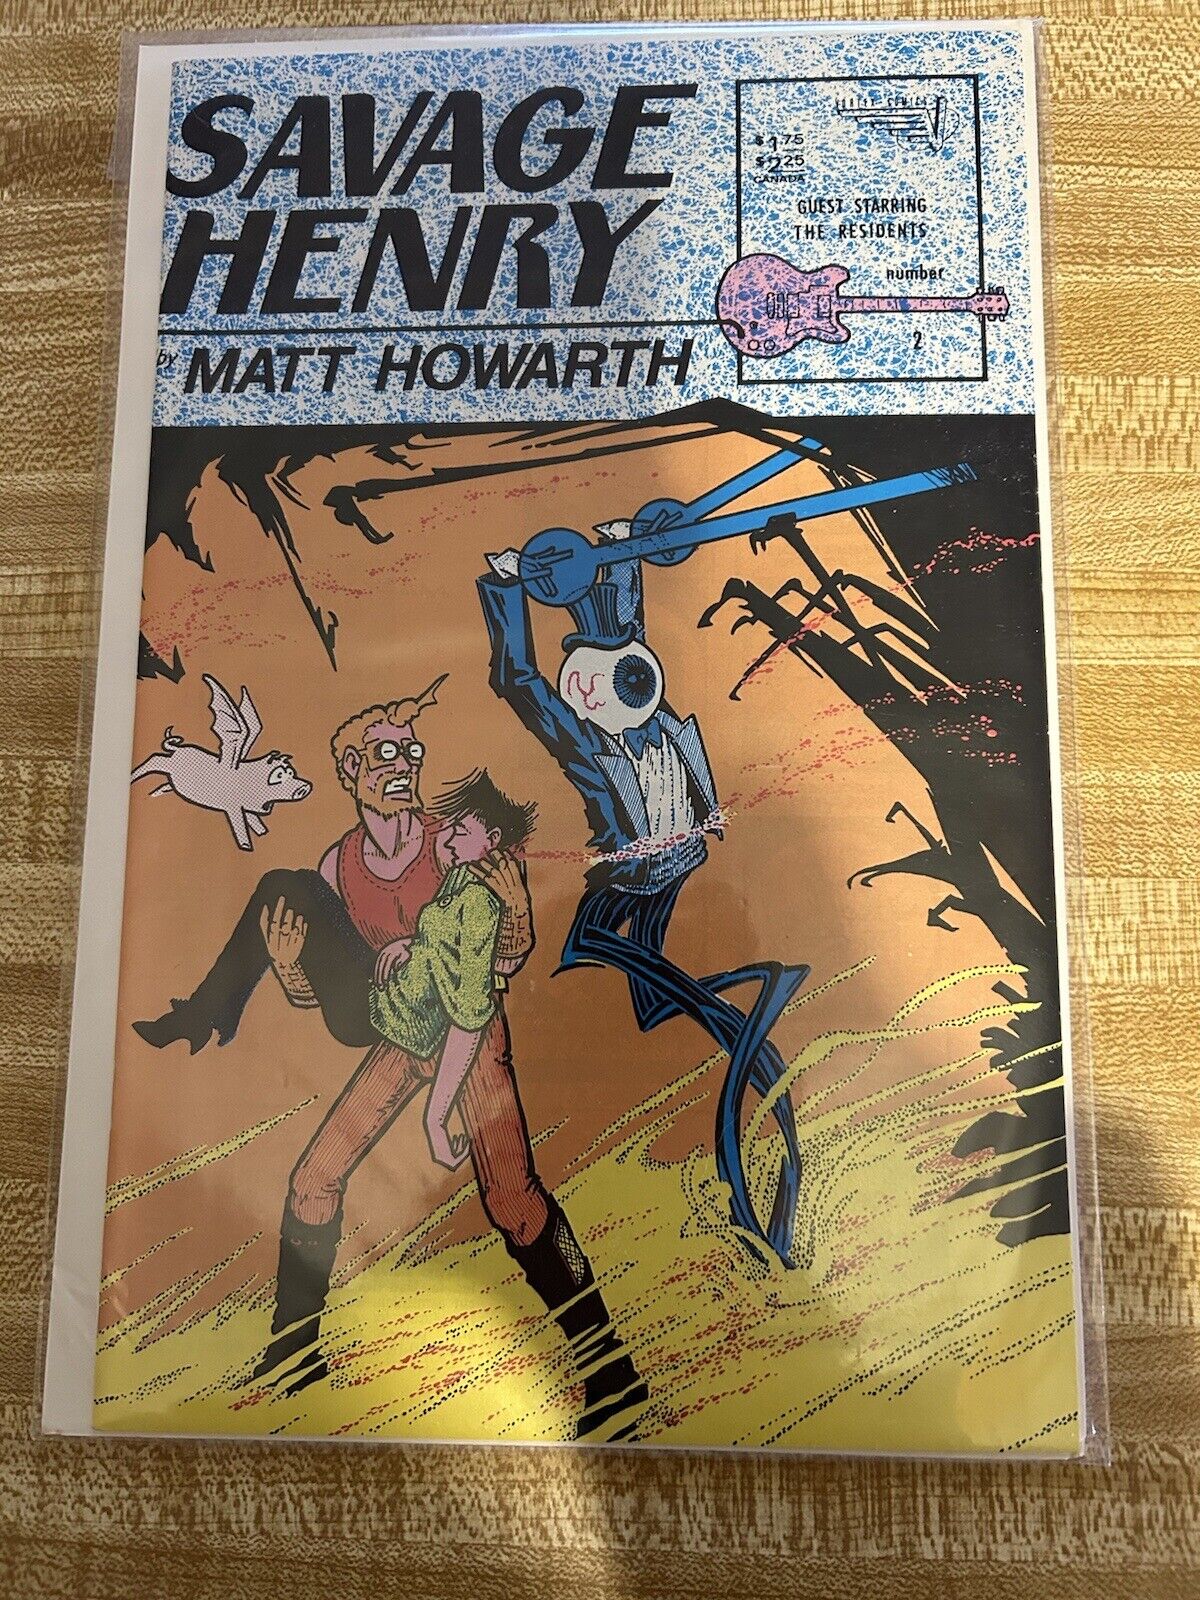 SAVAGE HENRY #2 BY MATT HOWART - 1987 RIP OFF PRESS